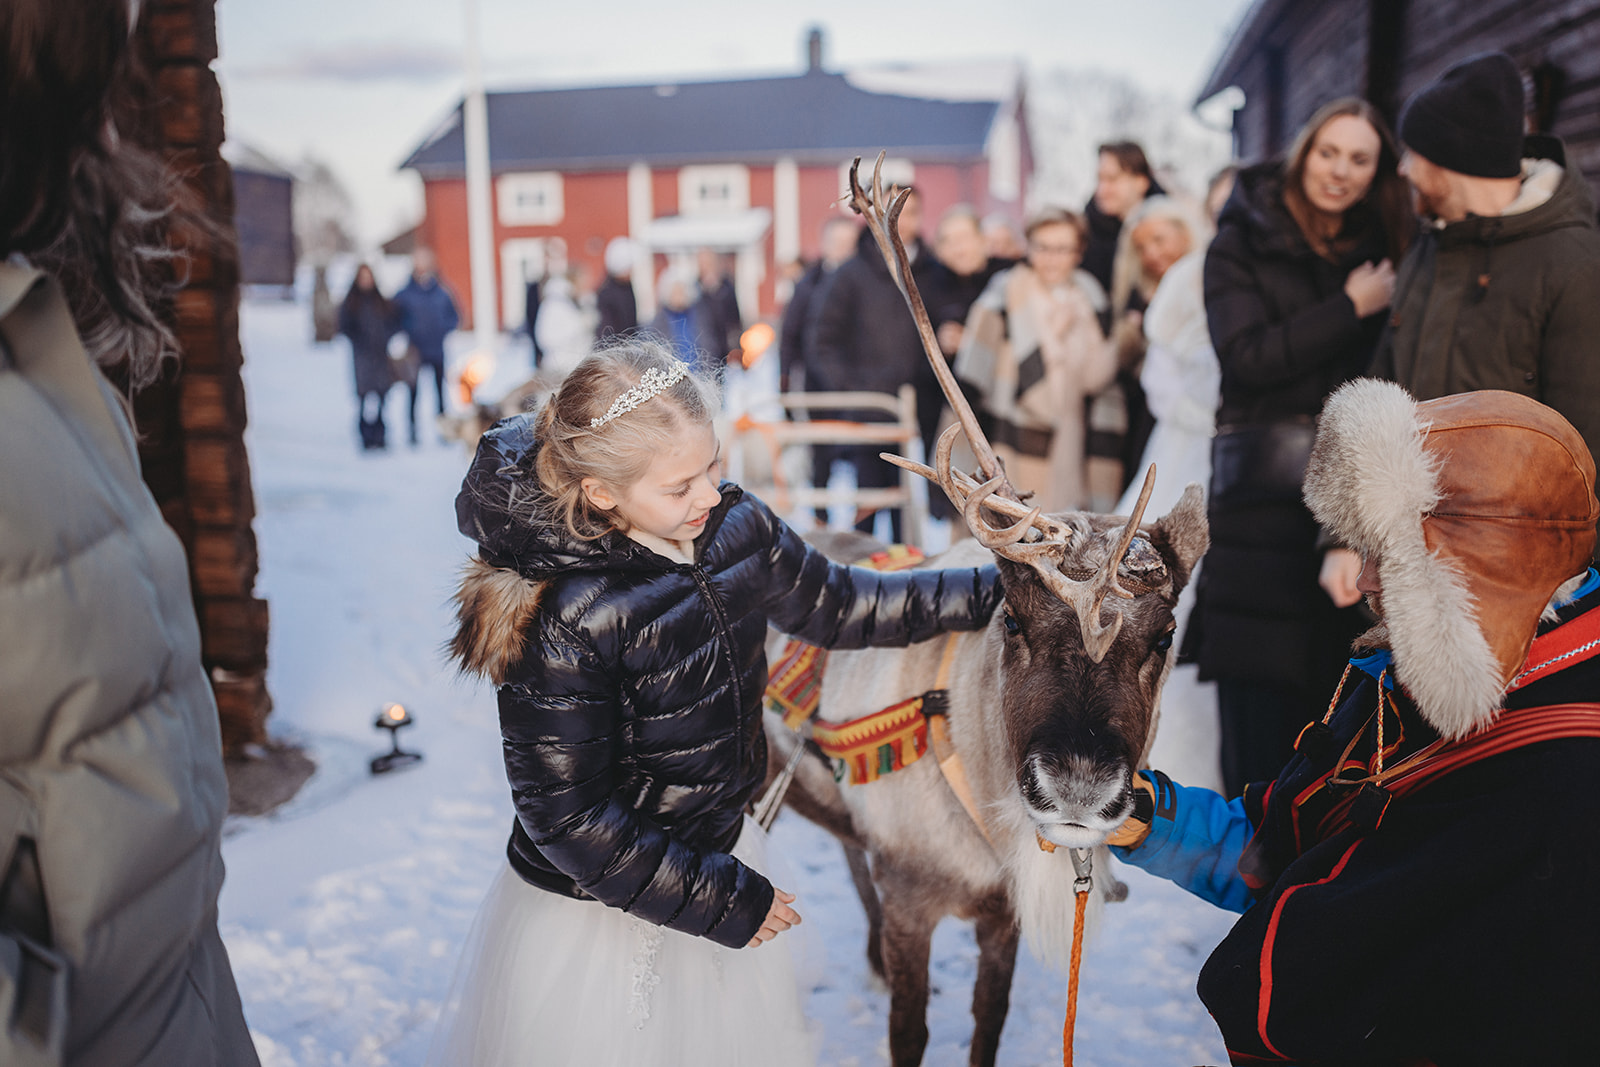 Wedding guest pets reindeer after bride and groom arrive